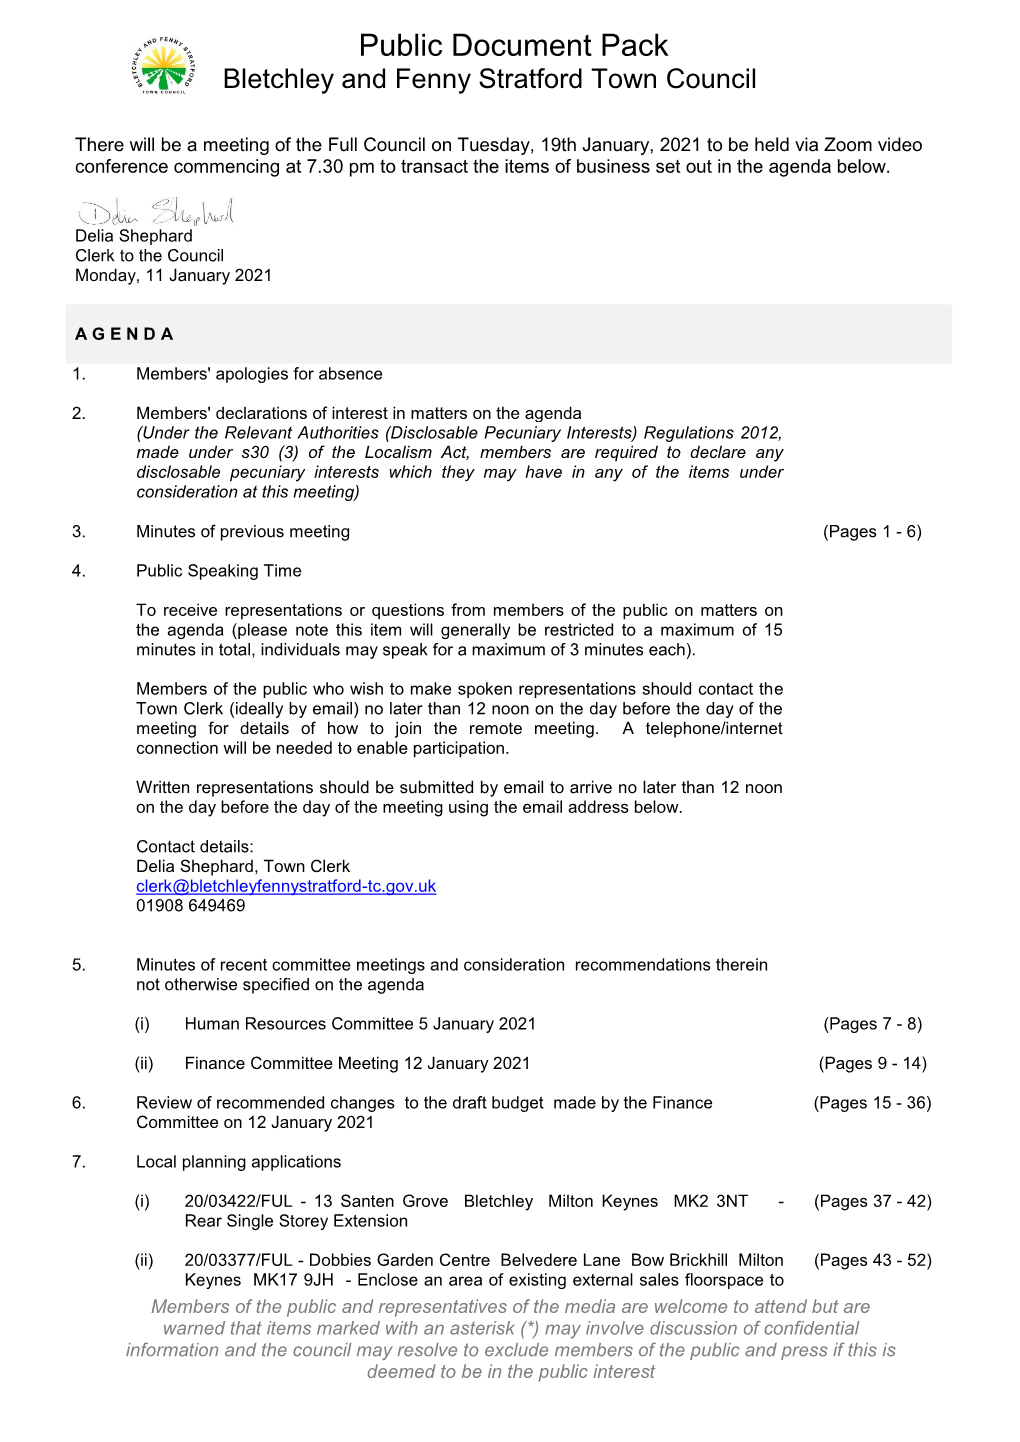 (Public Pack)Agenda Document for Full Council, 19/01/2021 19:30